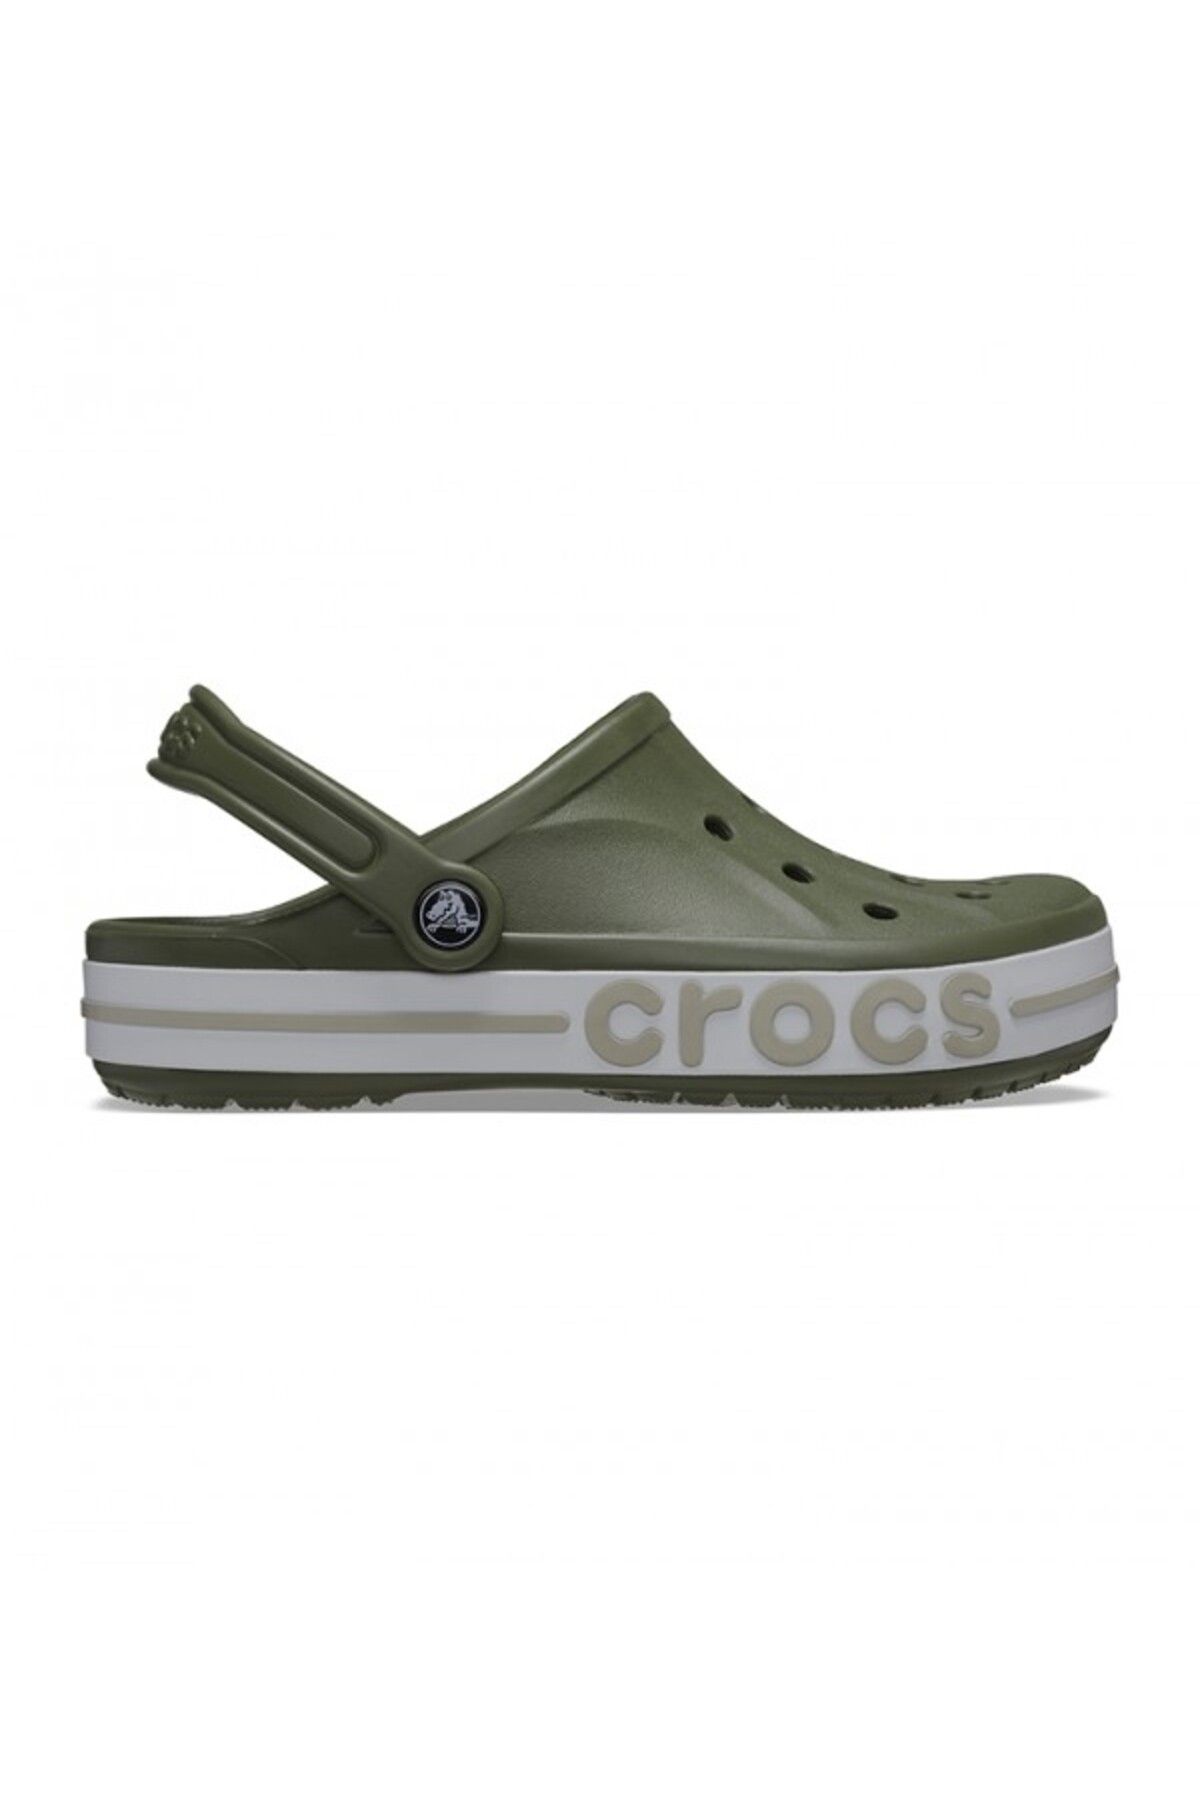 Crocs Terlik Bayaband Clog Army Green 205089-3tq